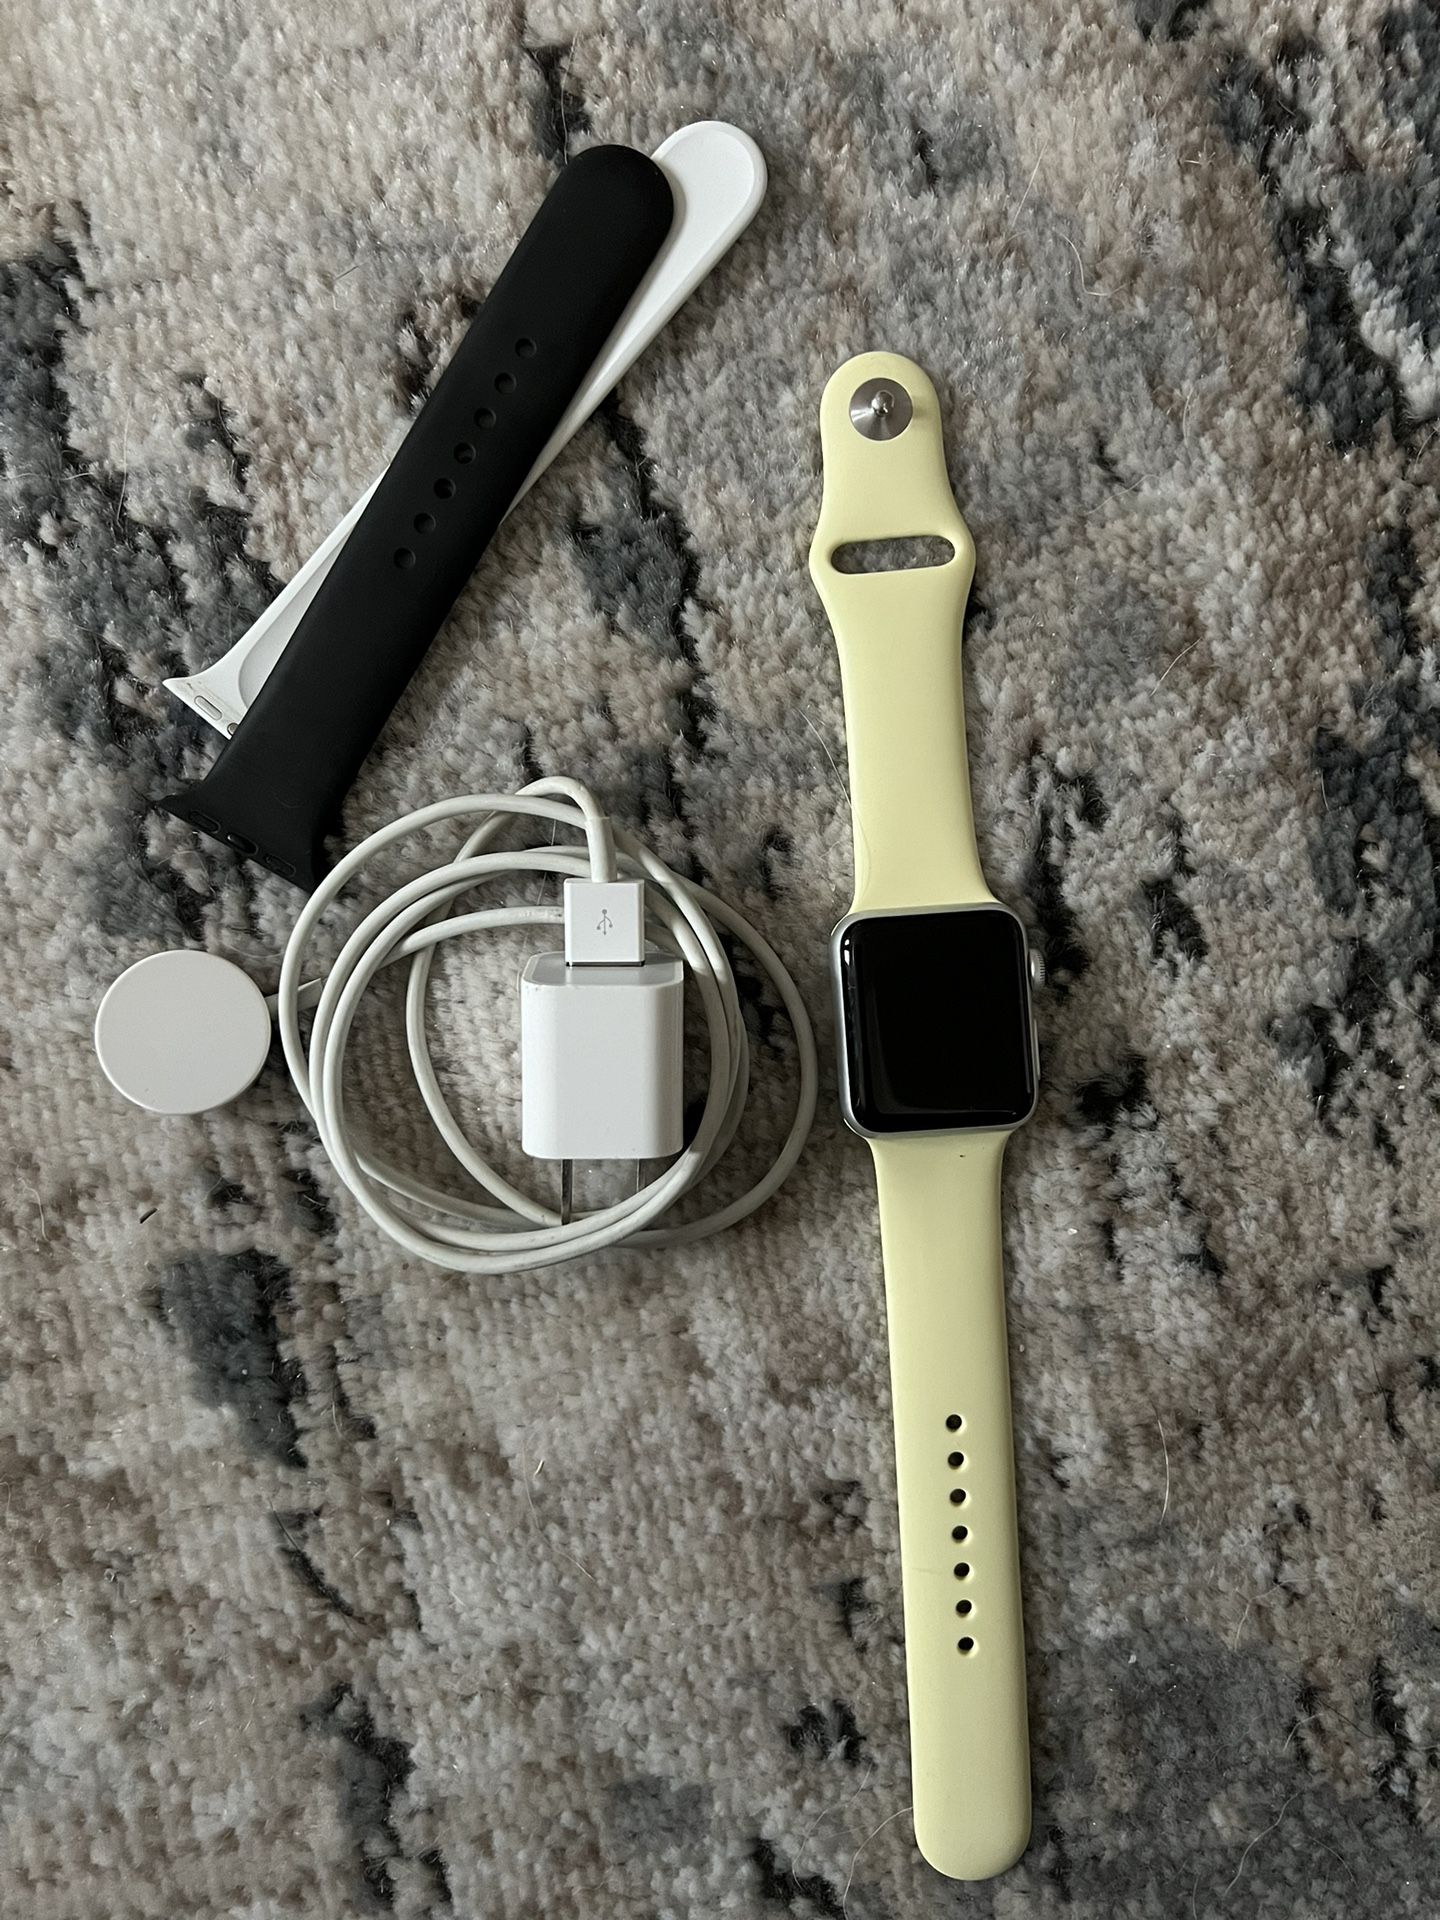 Apple Watch Series 3 - 38mm